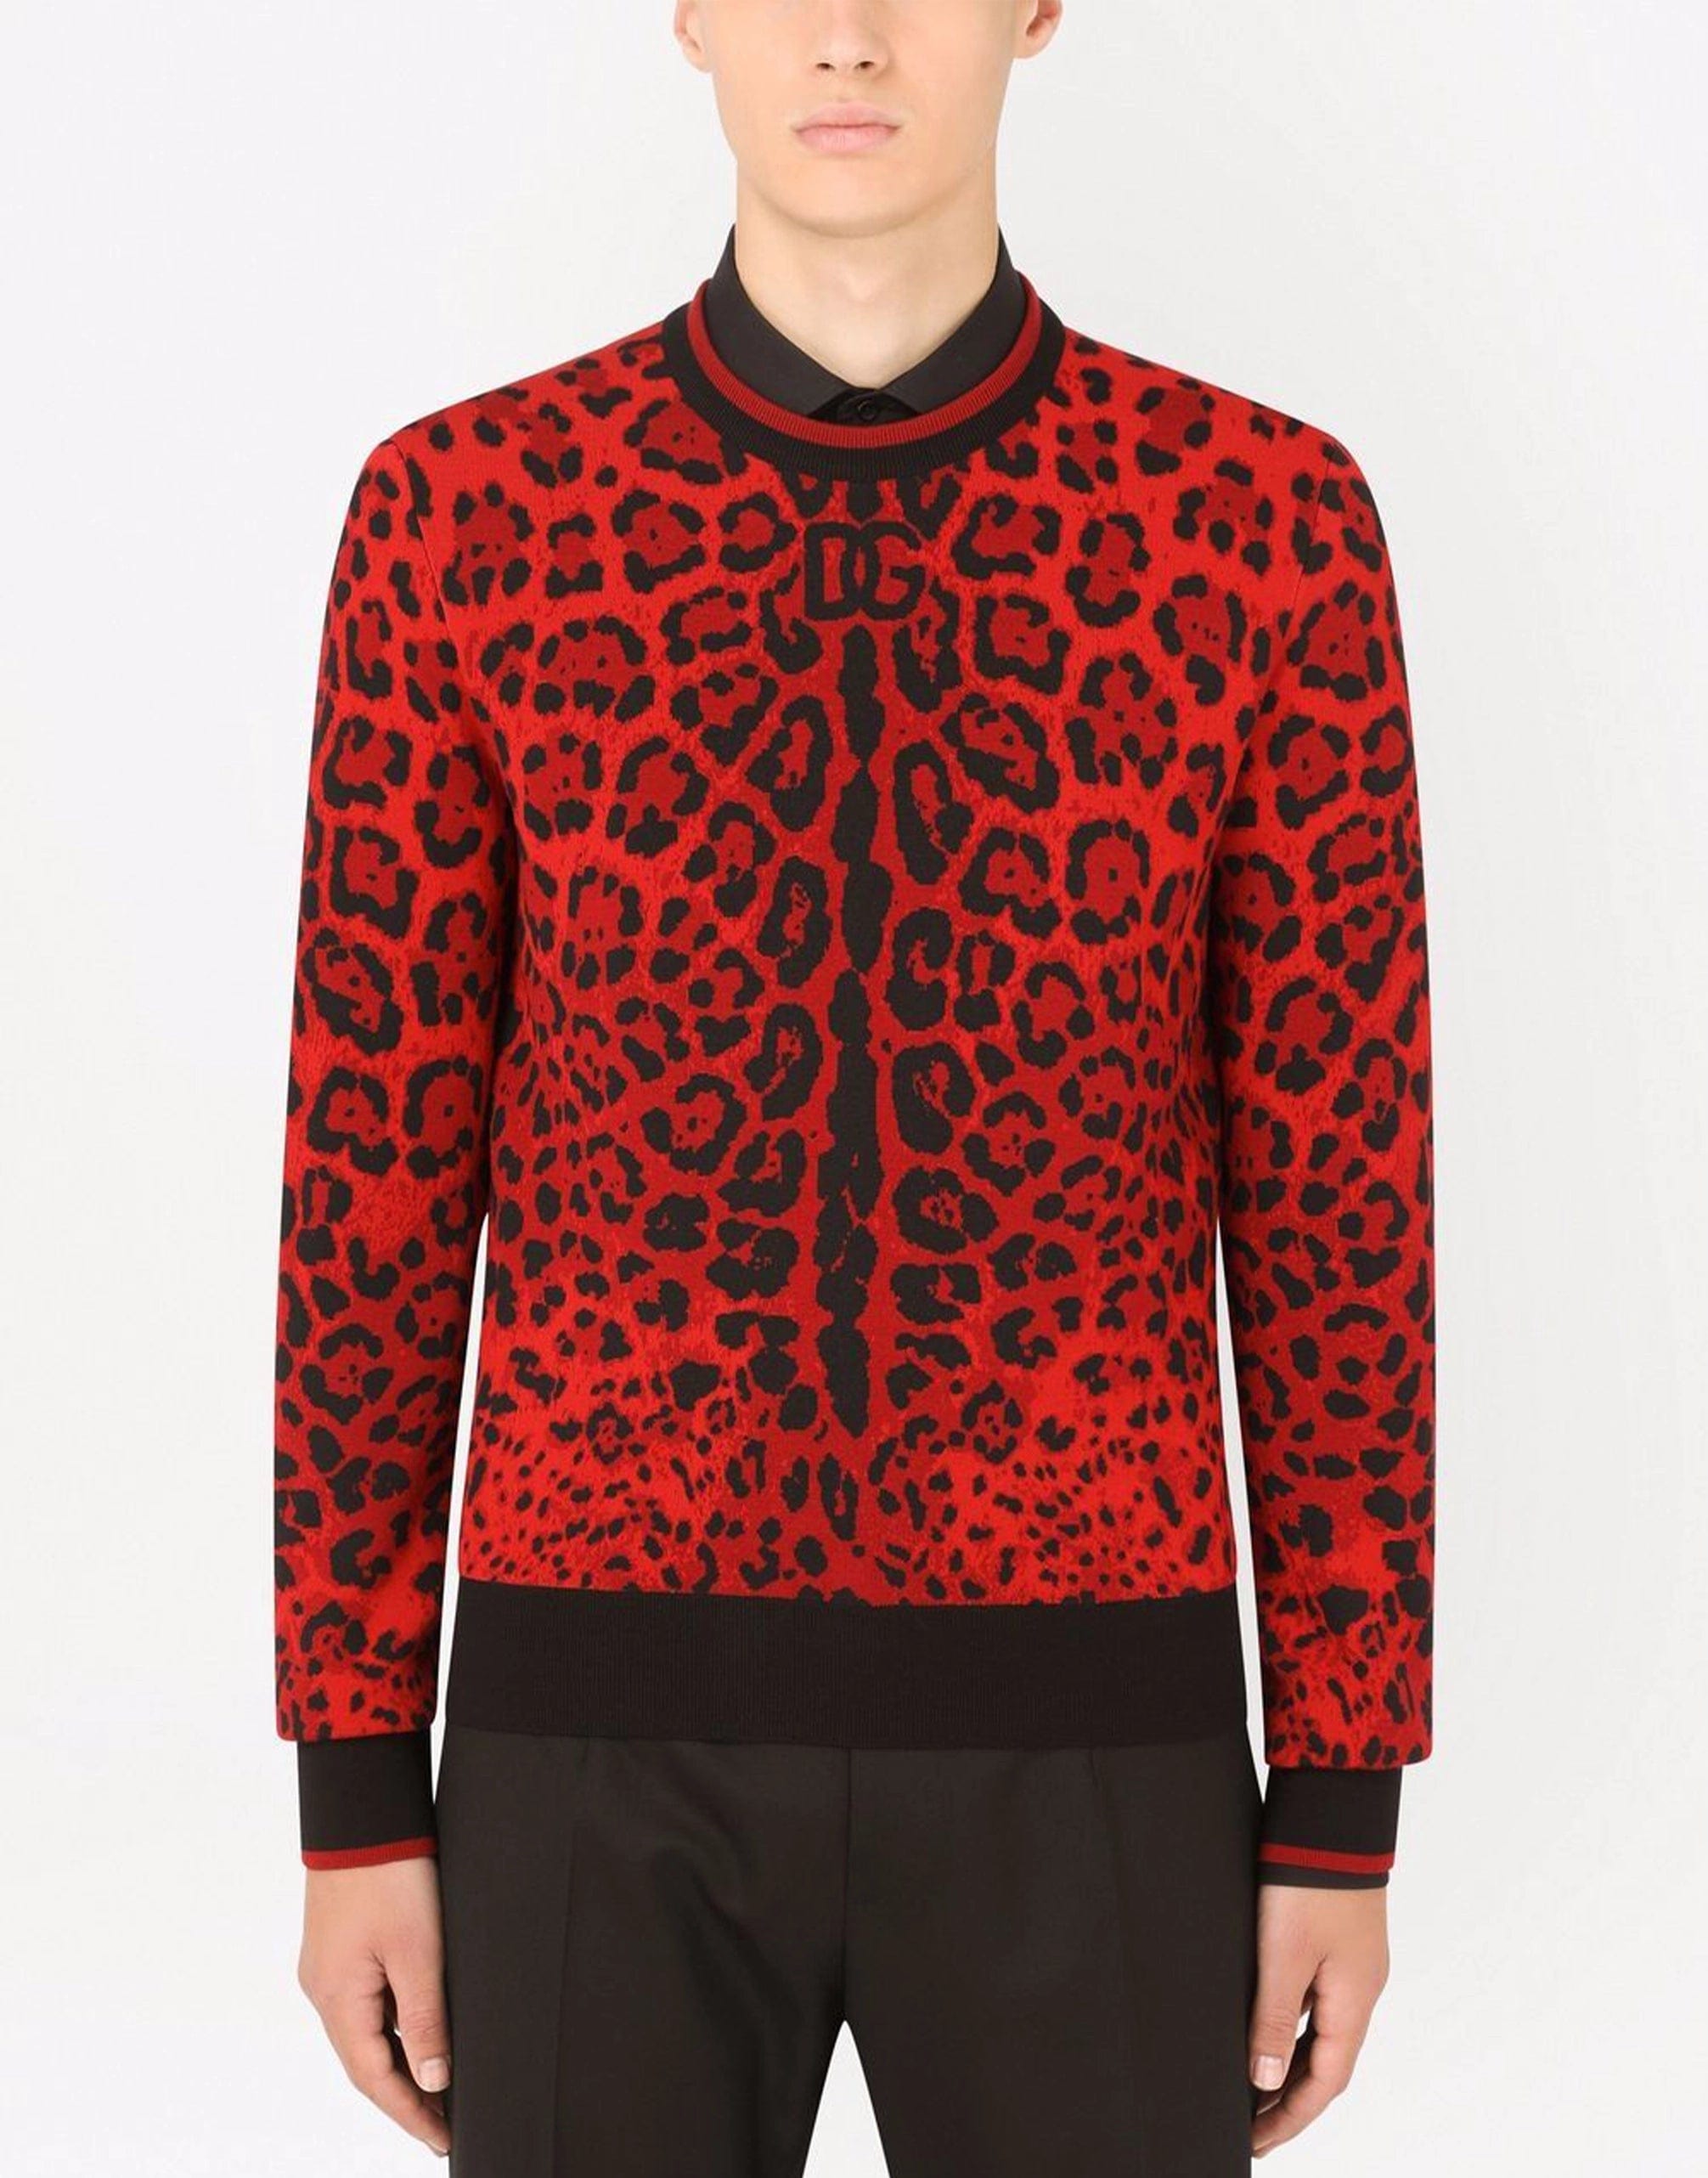 Dolce & Gabbana Leopard-Print Sweater